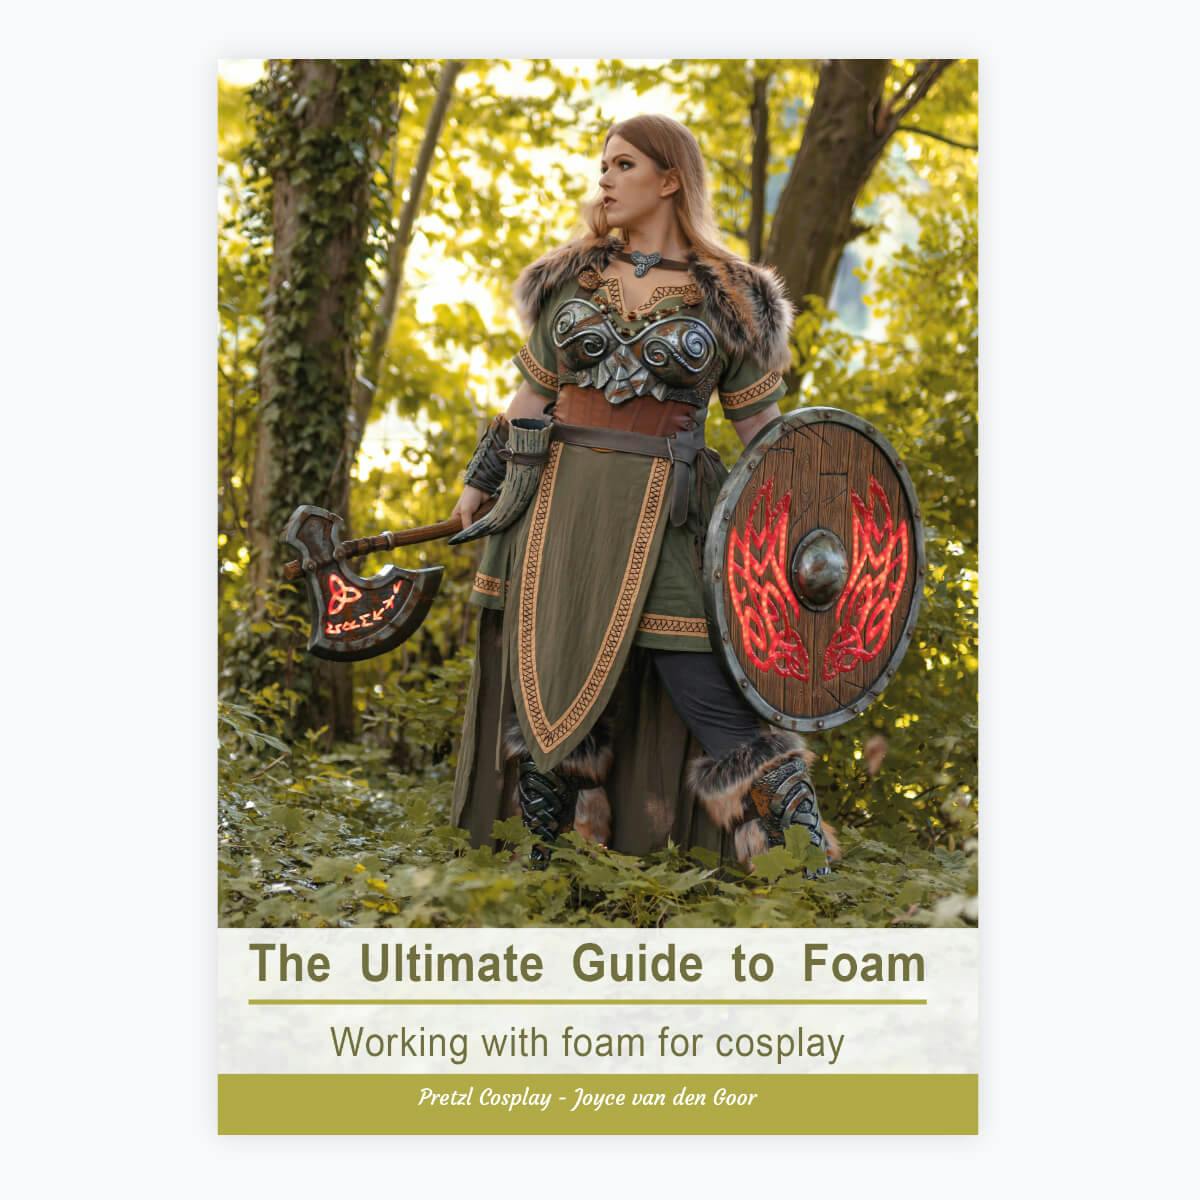 Book The Ultimate Guide to Foam - Working with foam for cosplay by Pretzl Cosplay - Joyce van den Goor